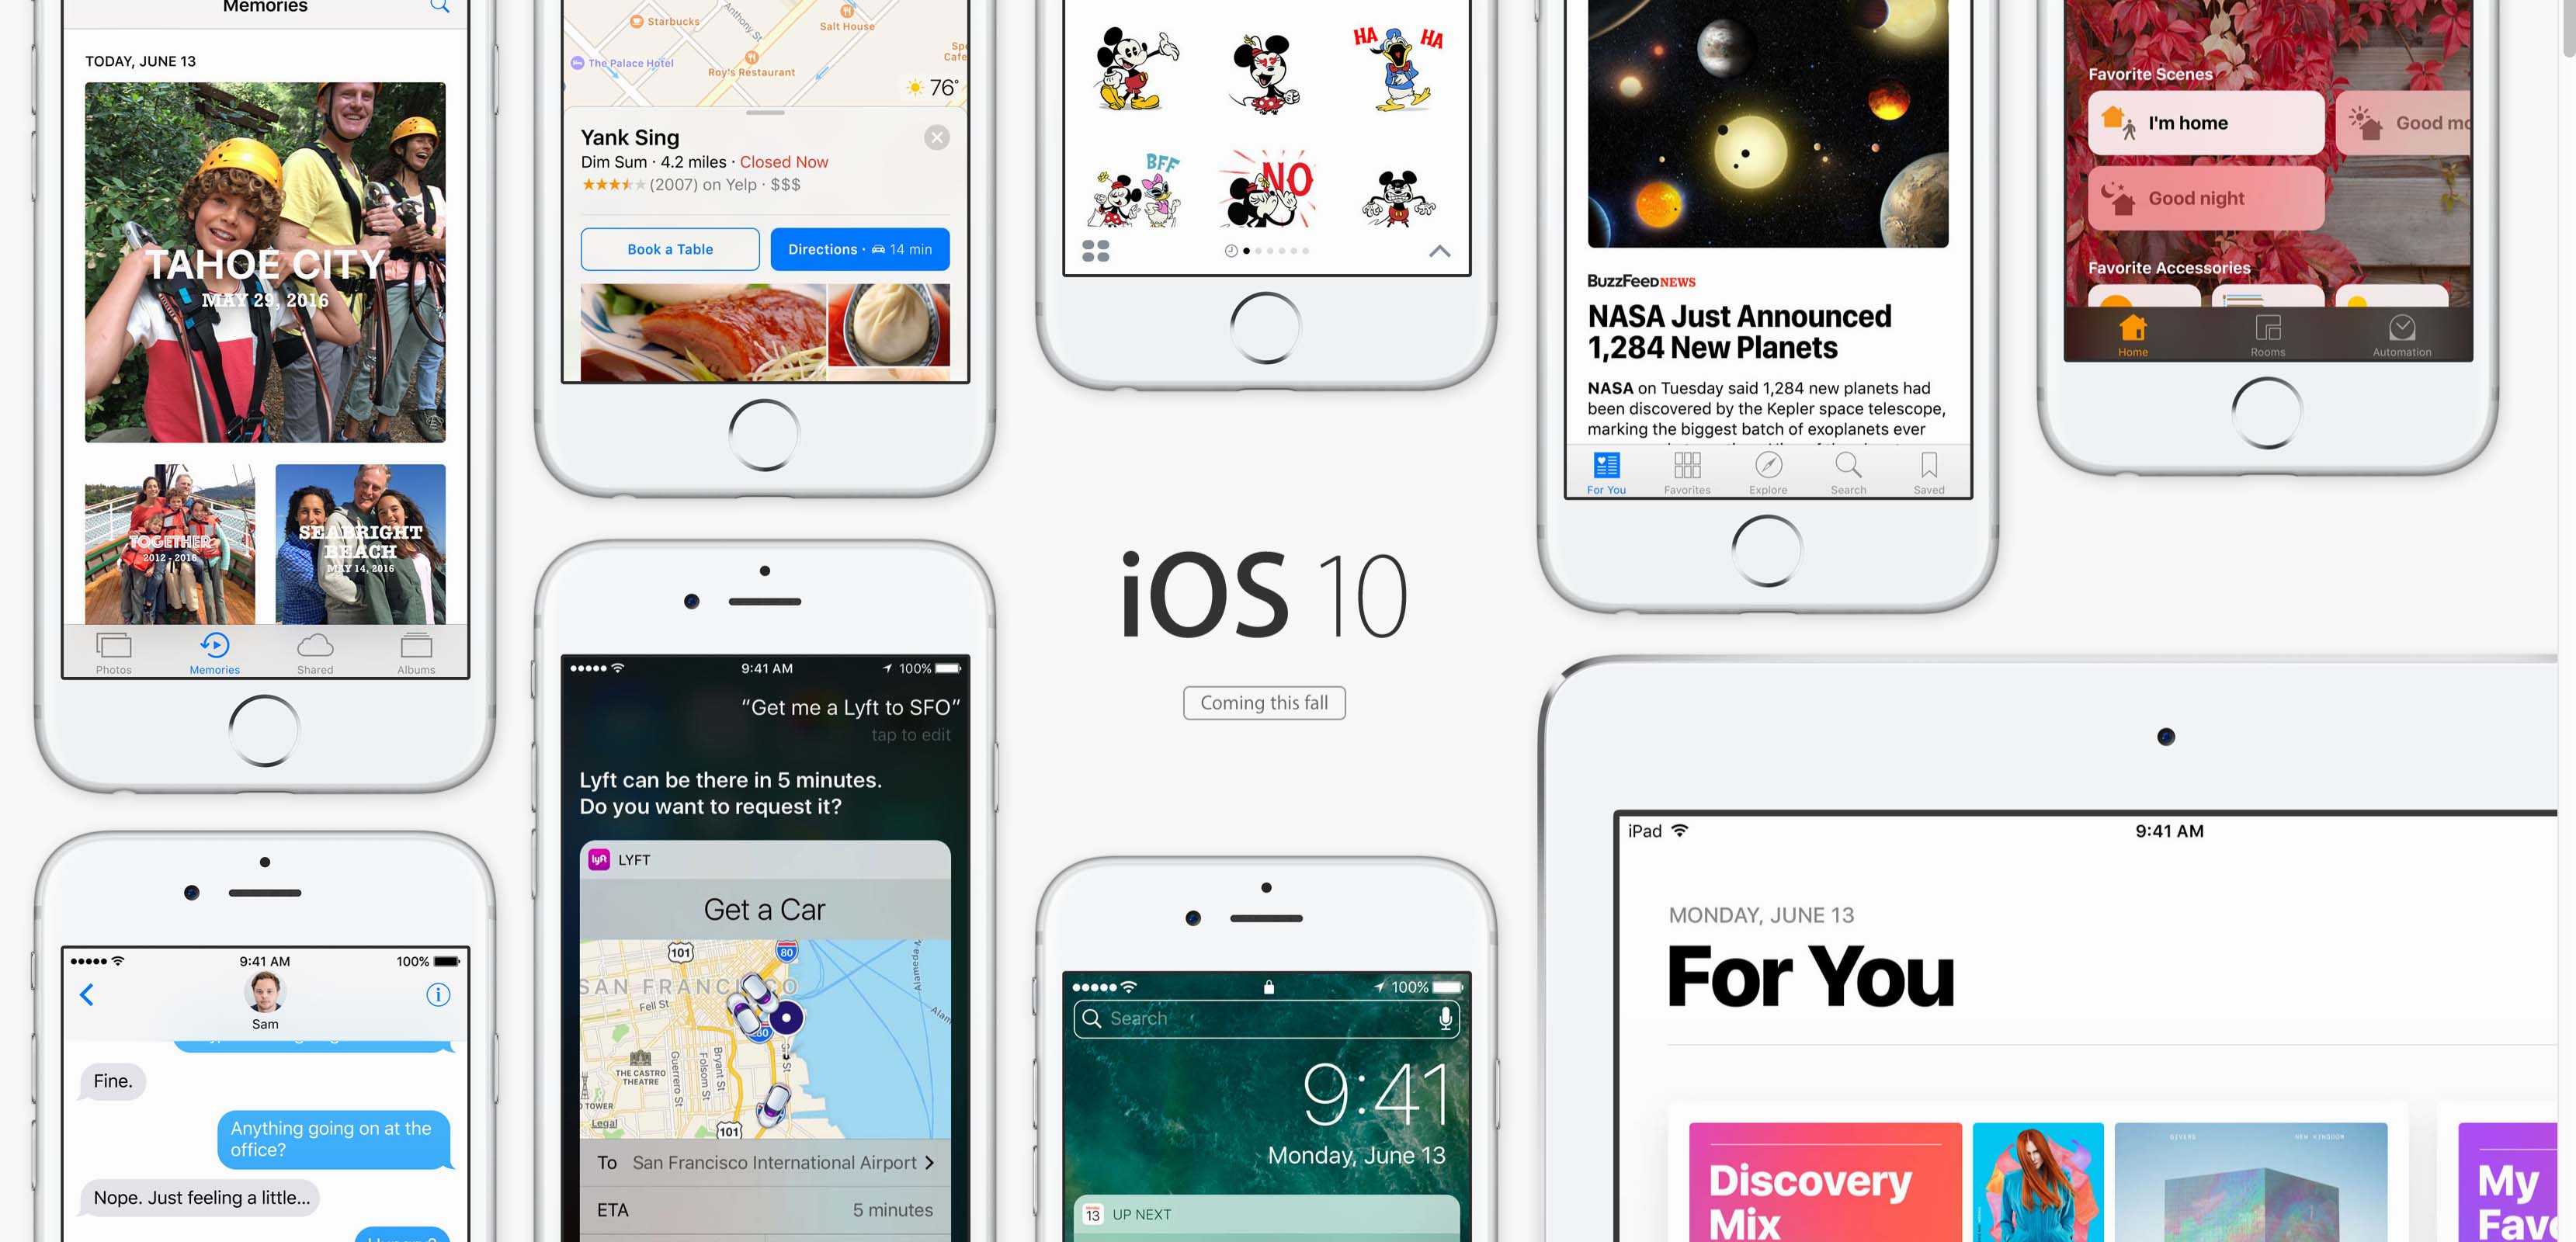 Download iOS 10 Stock HD wallpaper From Here ! [ZIP]